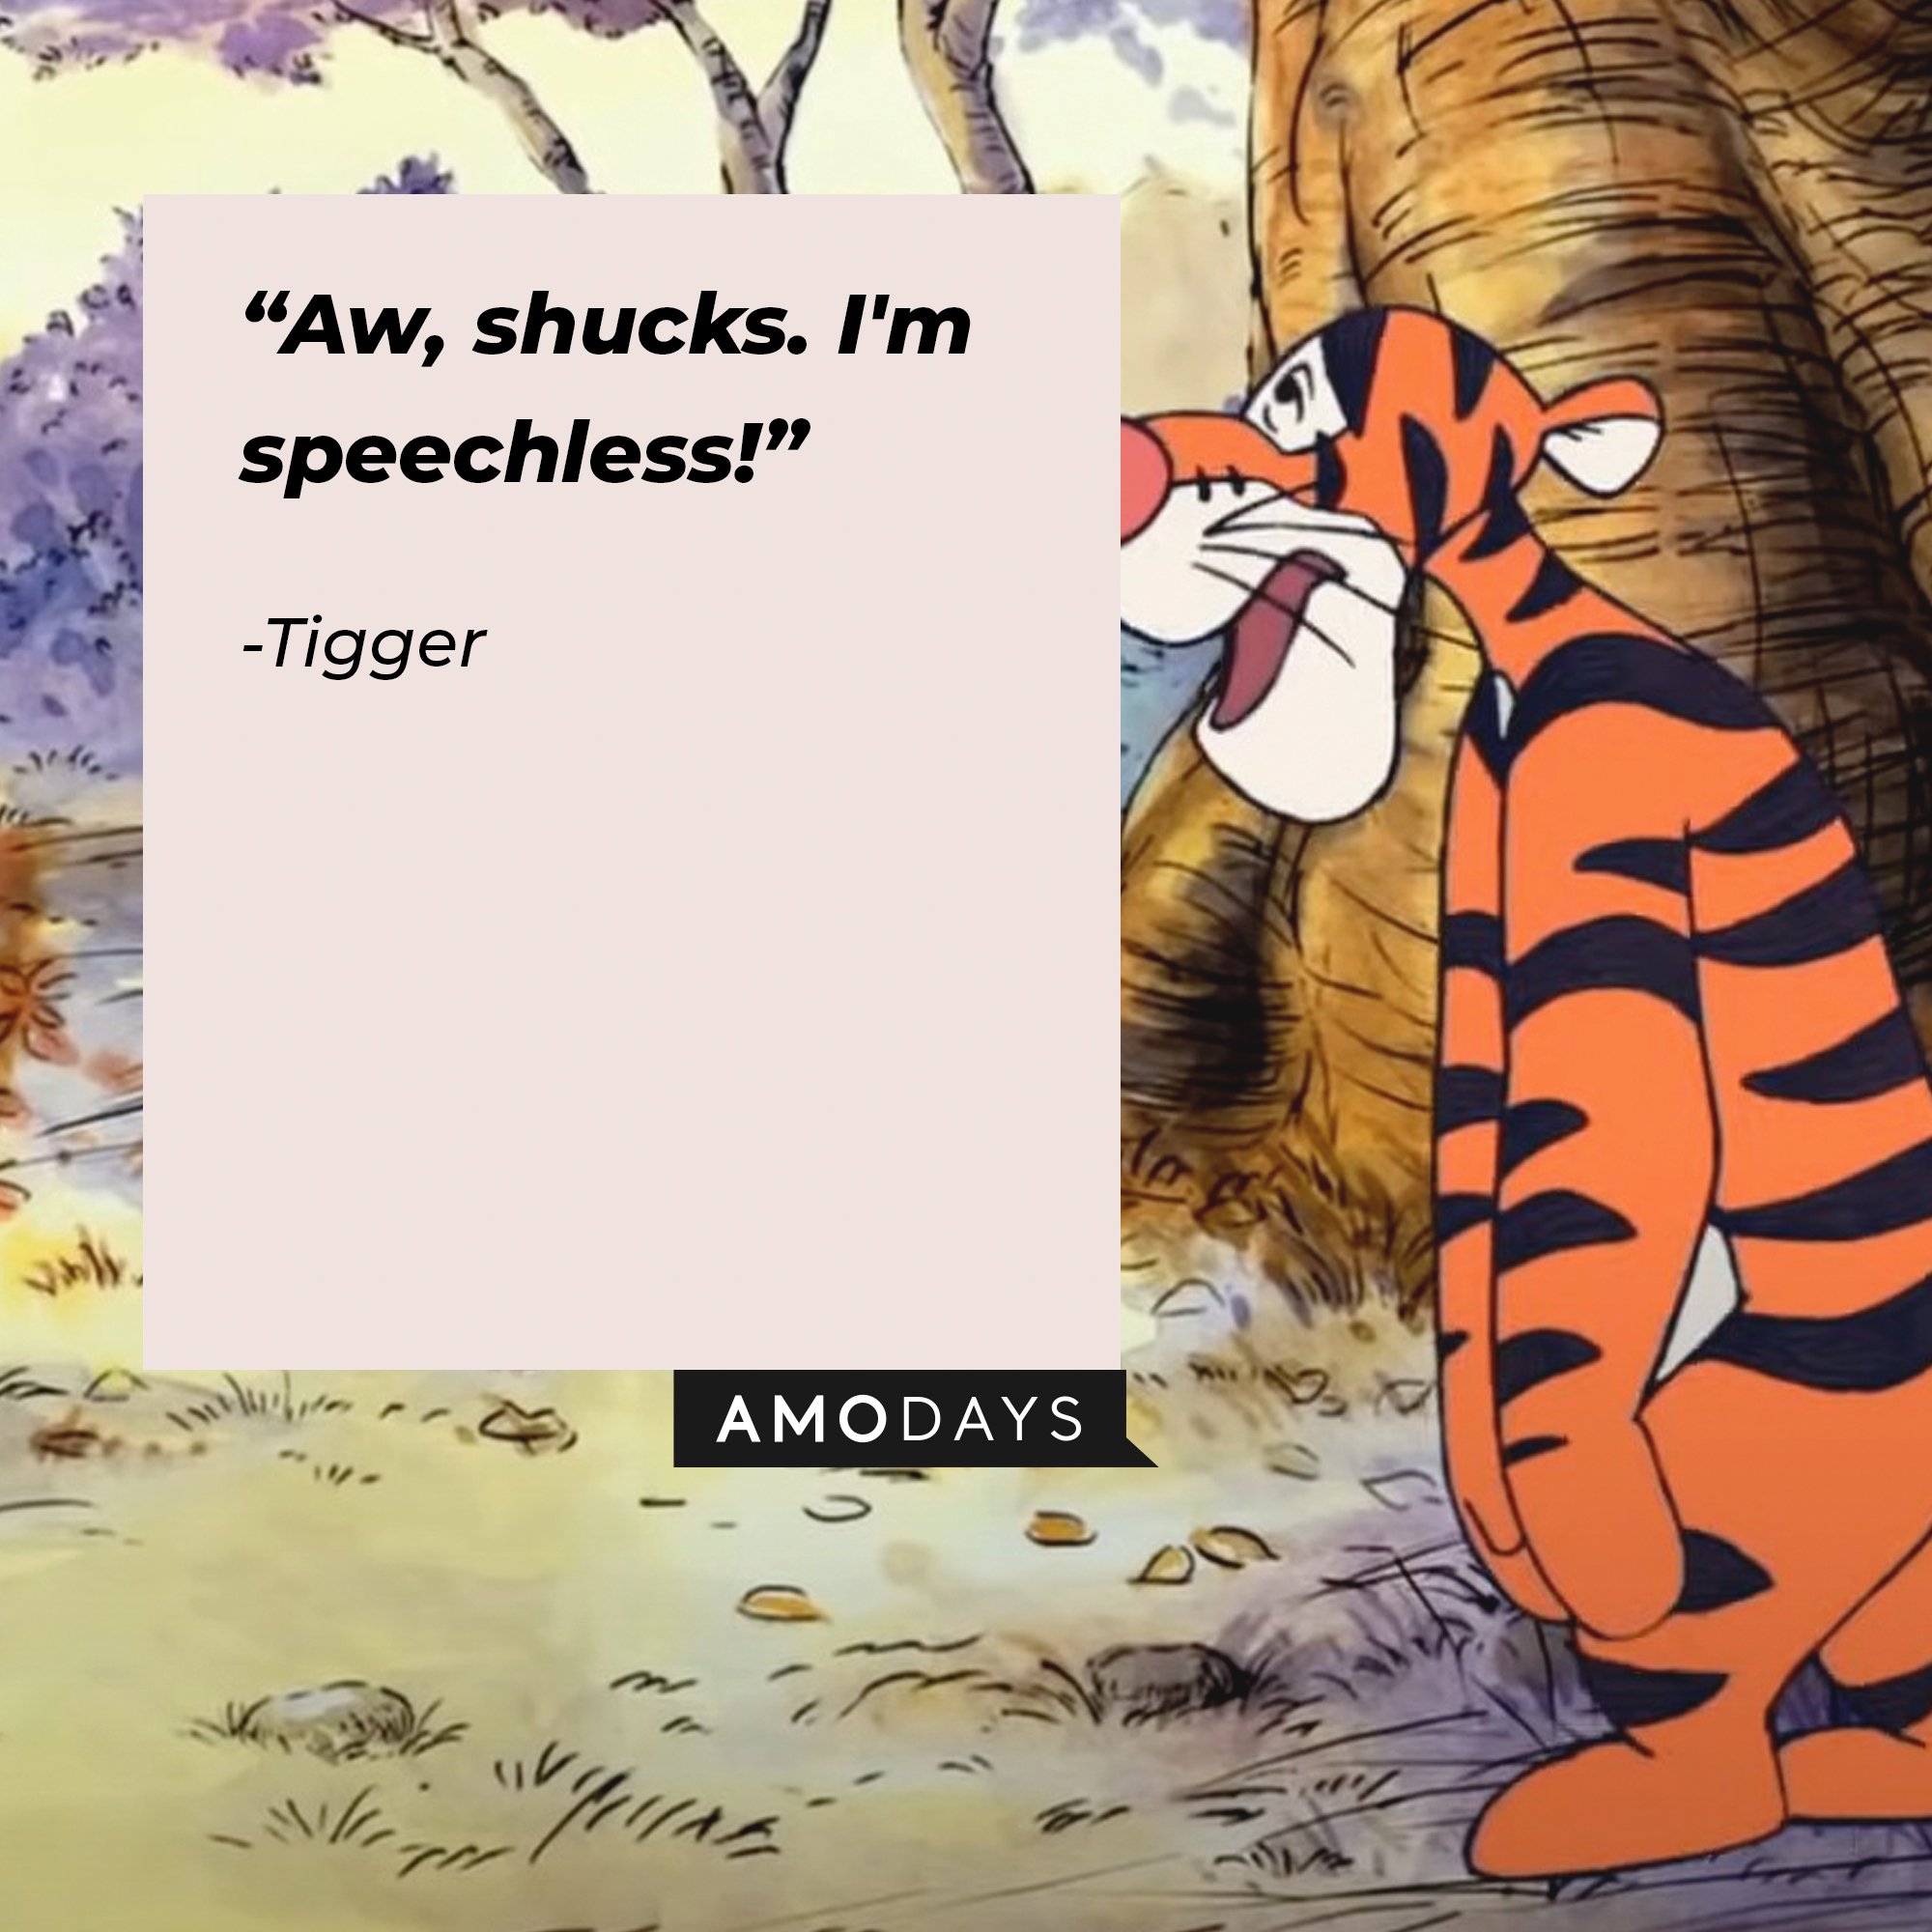 Tigger’s quote: "Aw, shucks. I'm speechless!" │ Image: AmoDays